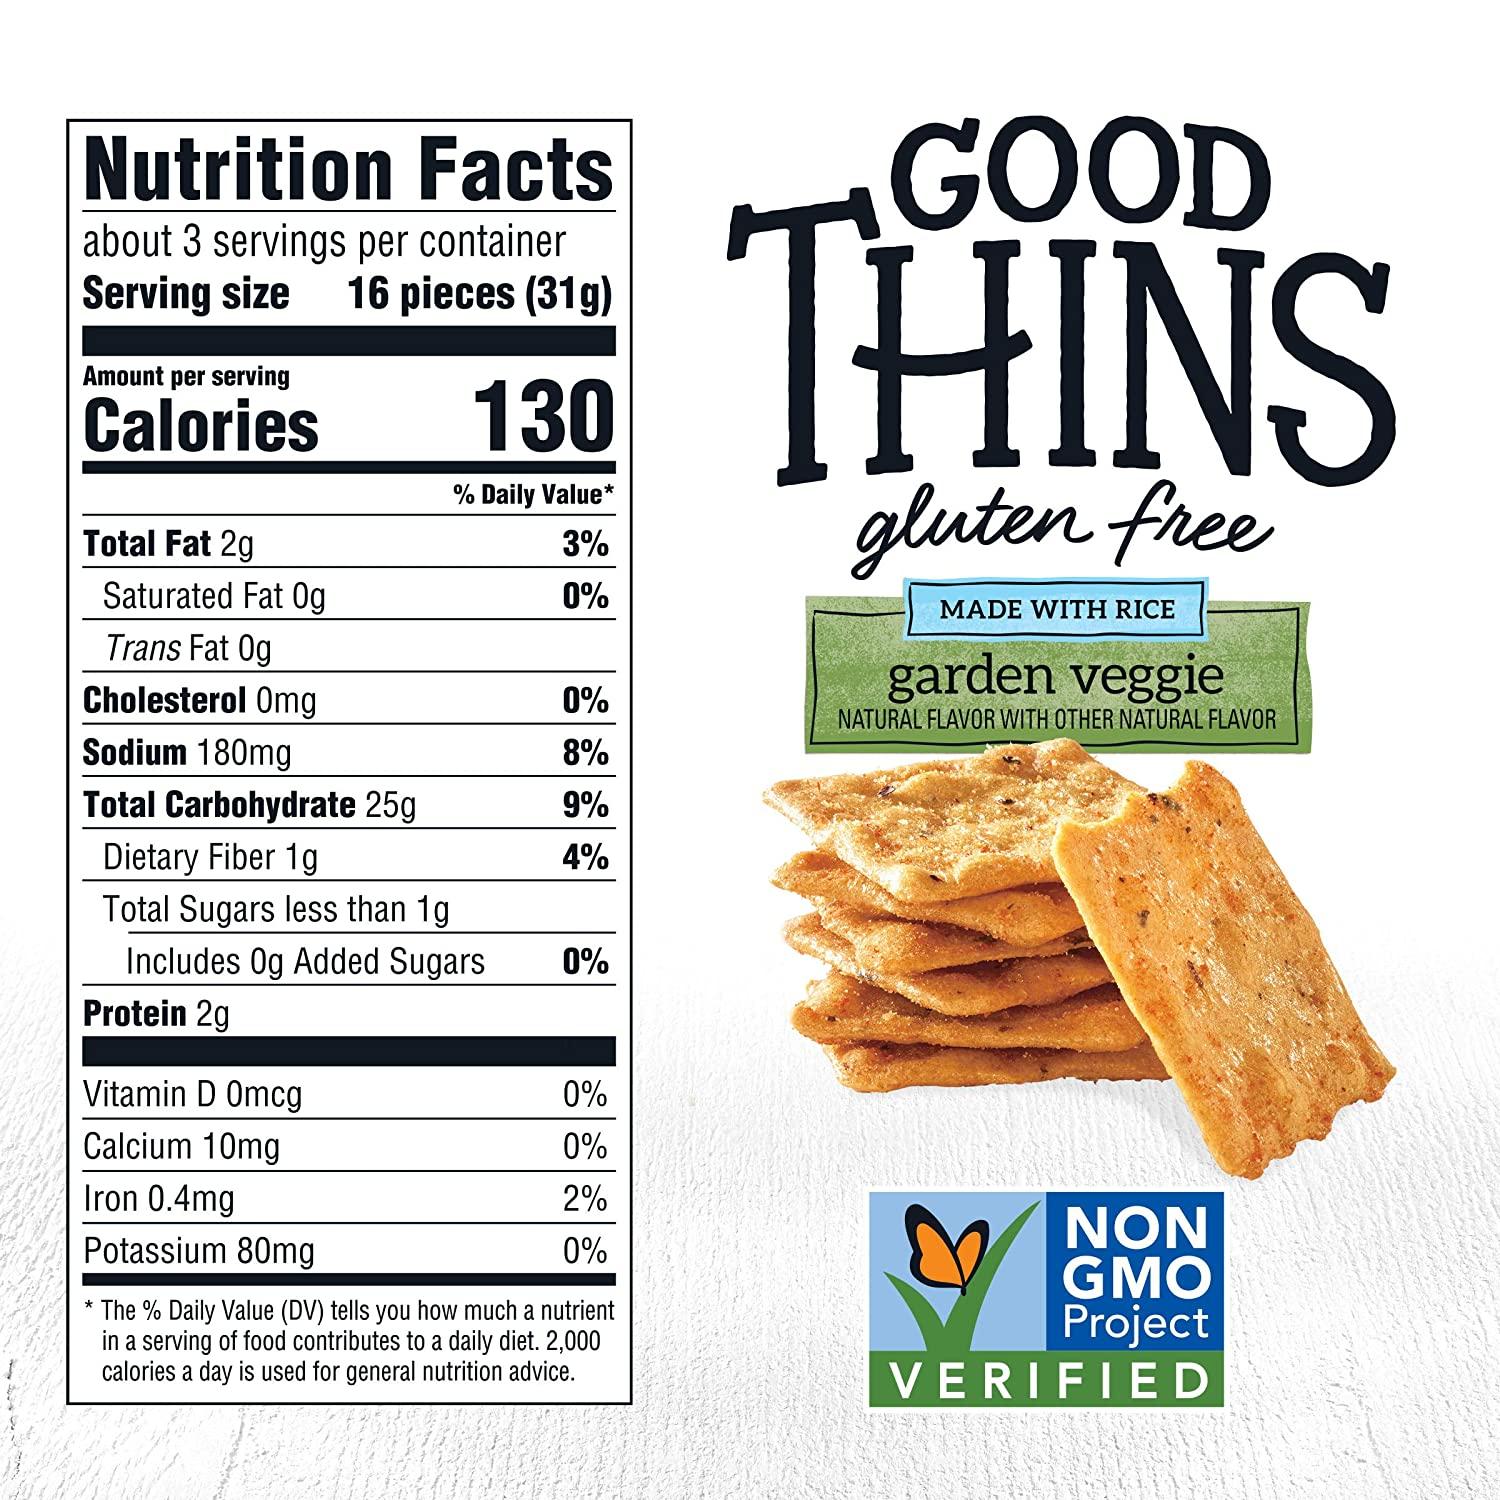 Nabisco GOOD THiNS Corn Snacks Sea Salt Gluten Free - 3.5 oz box